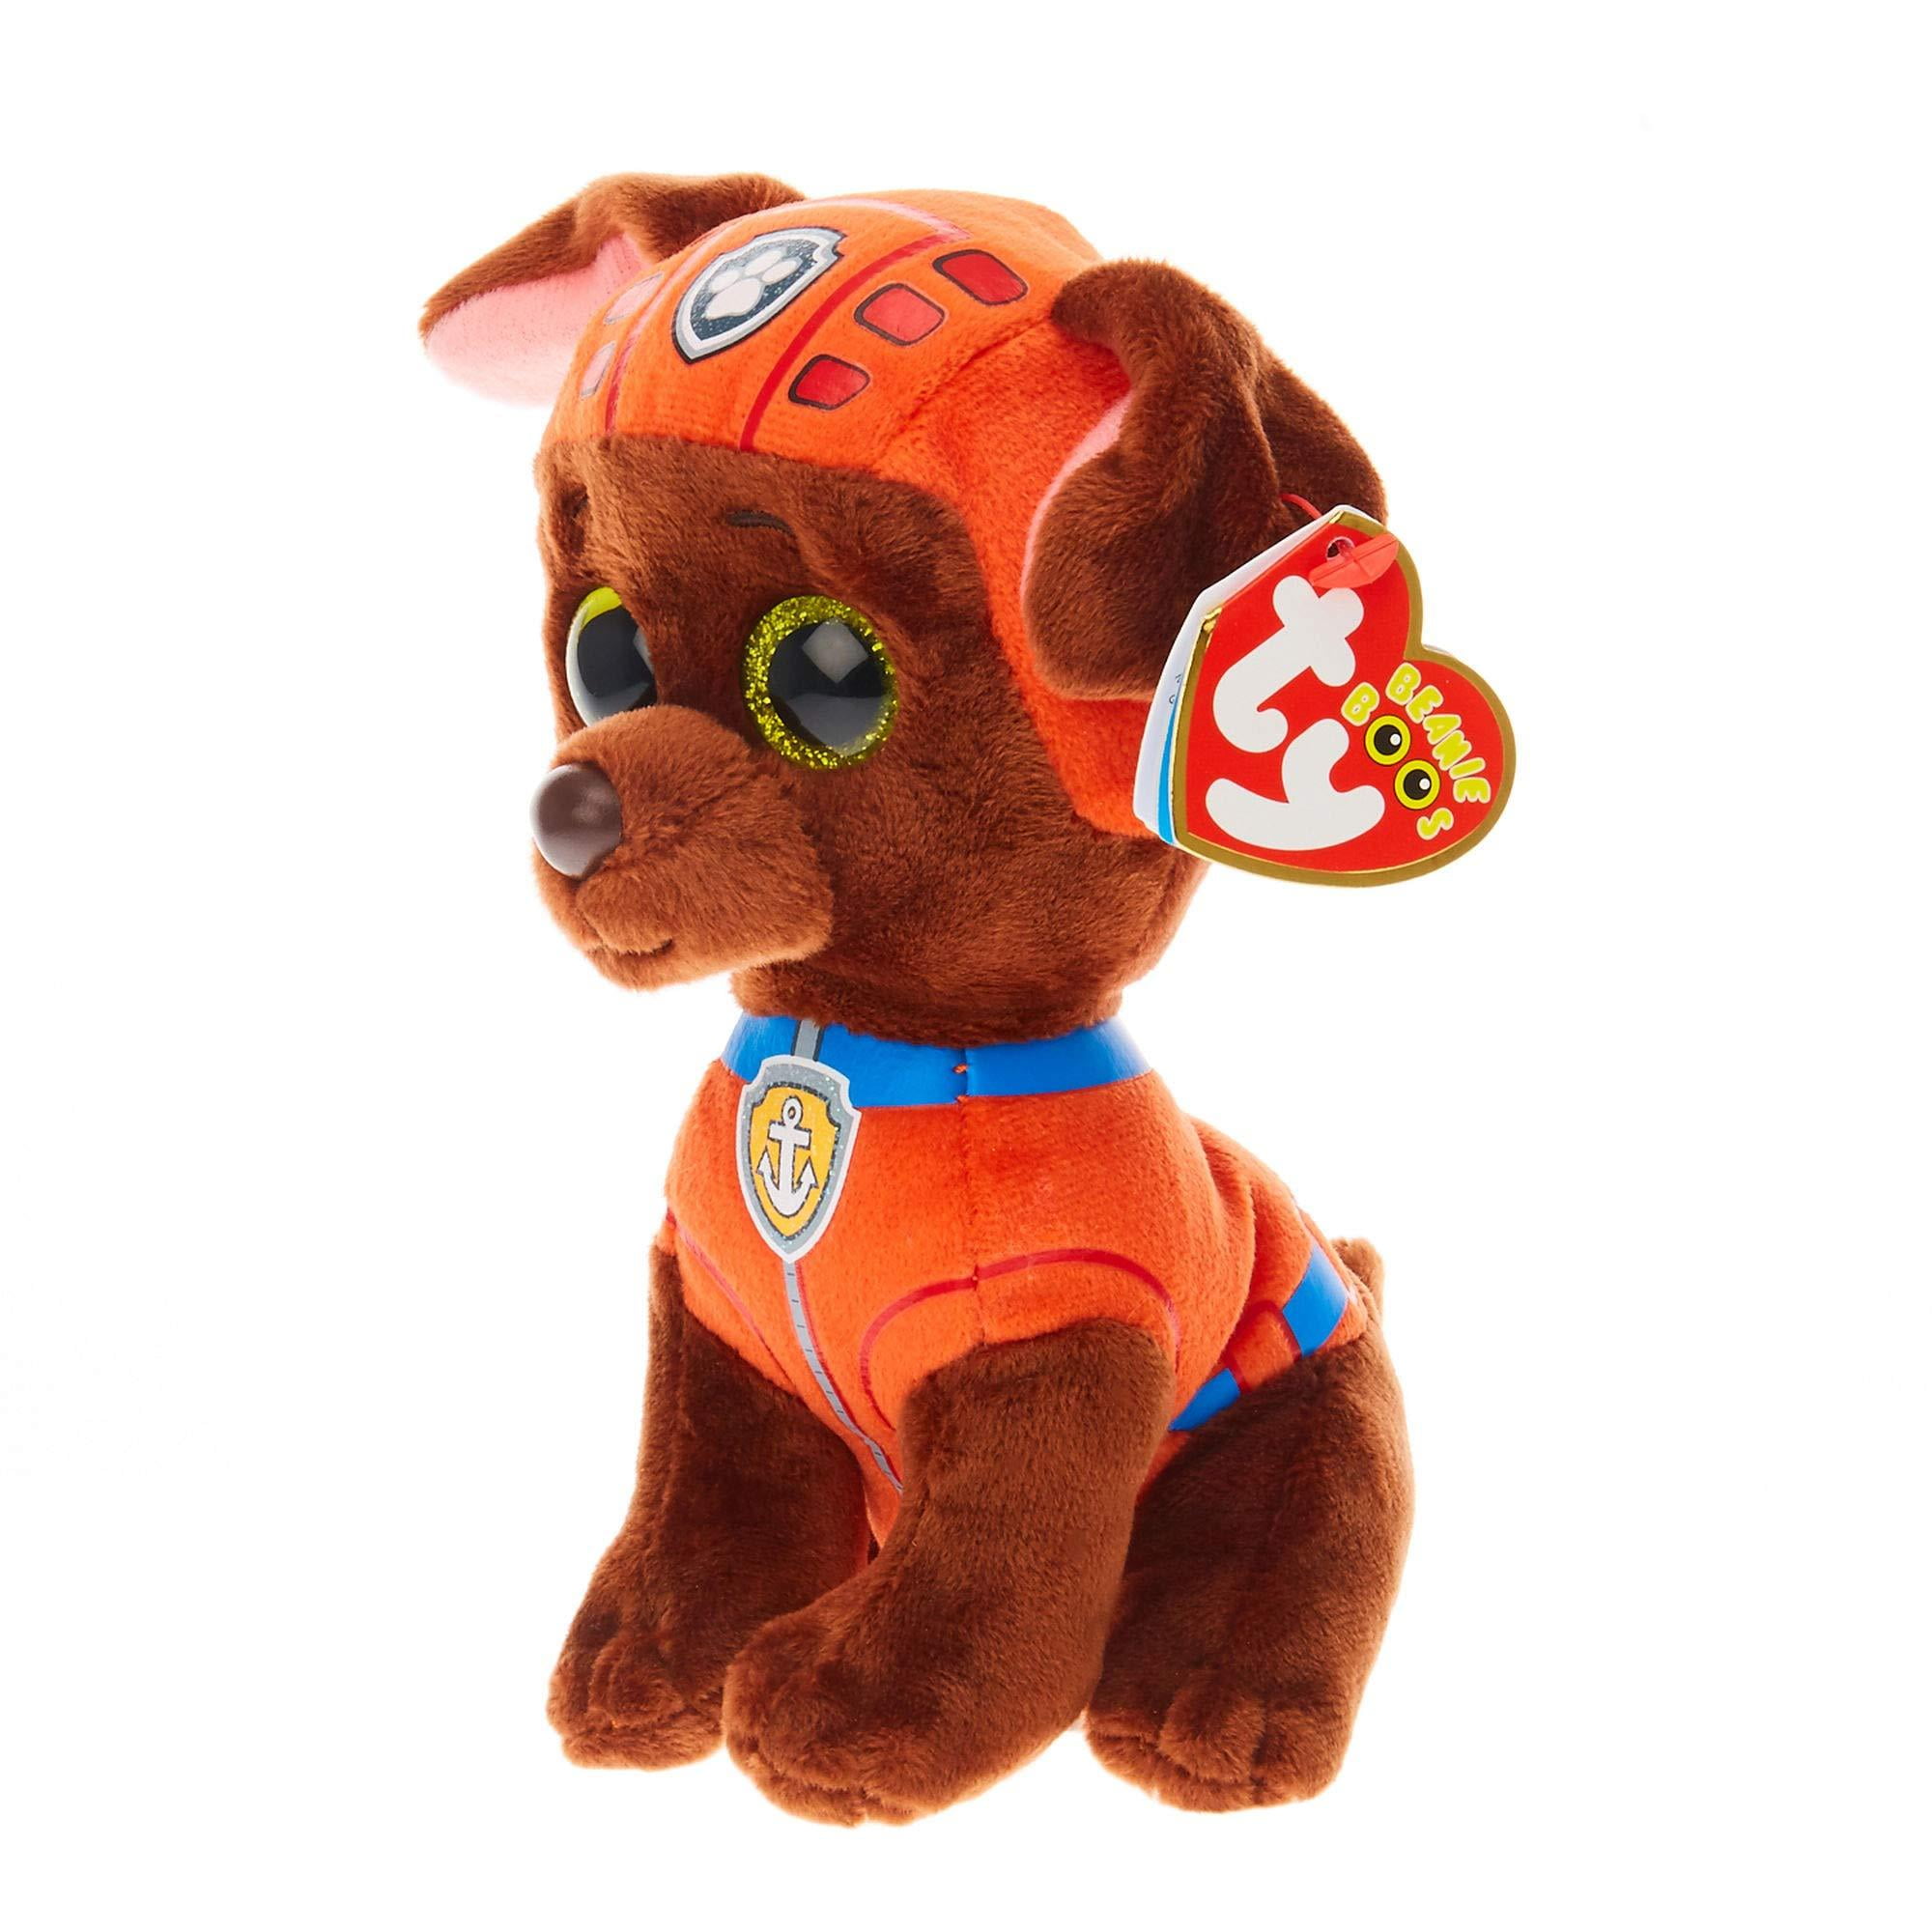 Zuma Labrador Dog 6" in Hand for sale online 2017 Ty Beanie Babies Nickelodeon Paw Patrol 